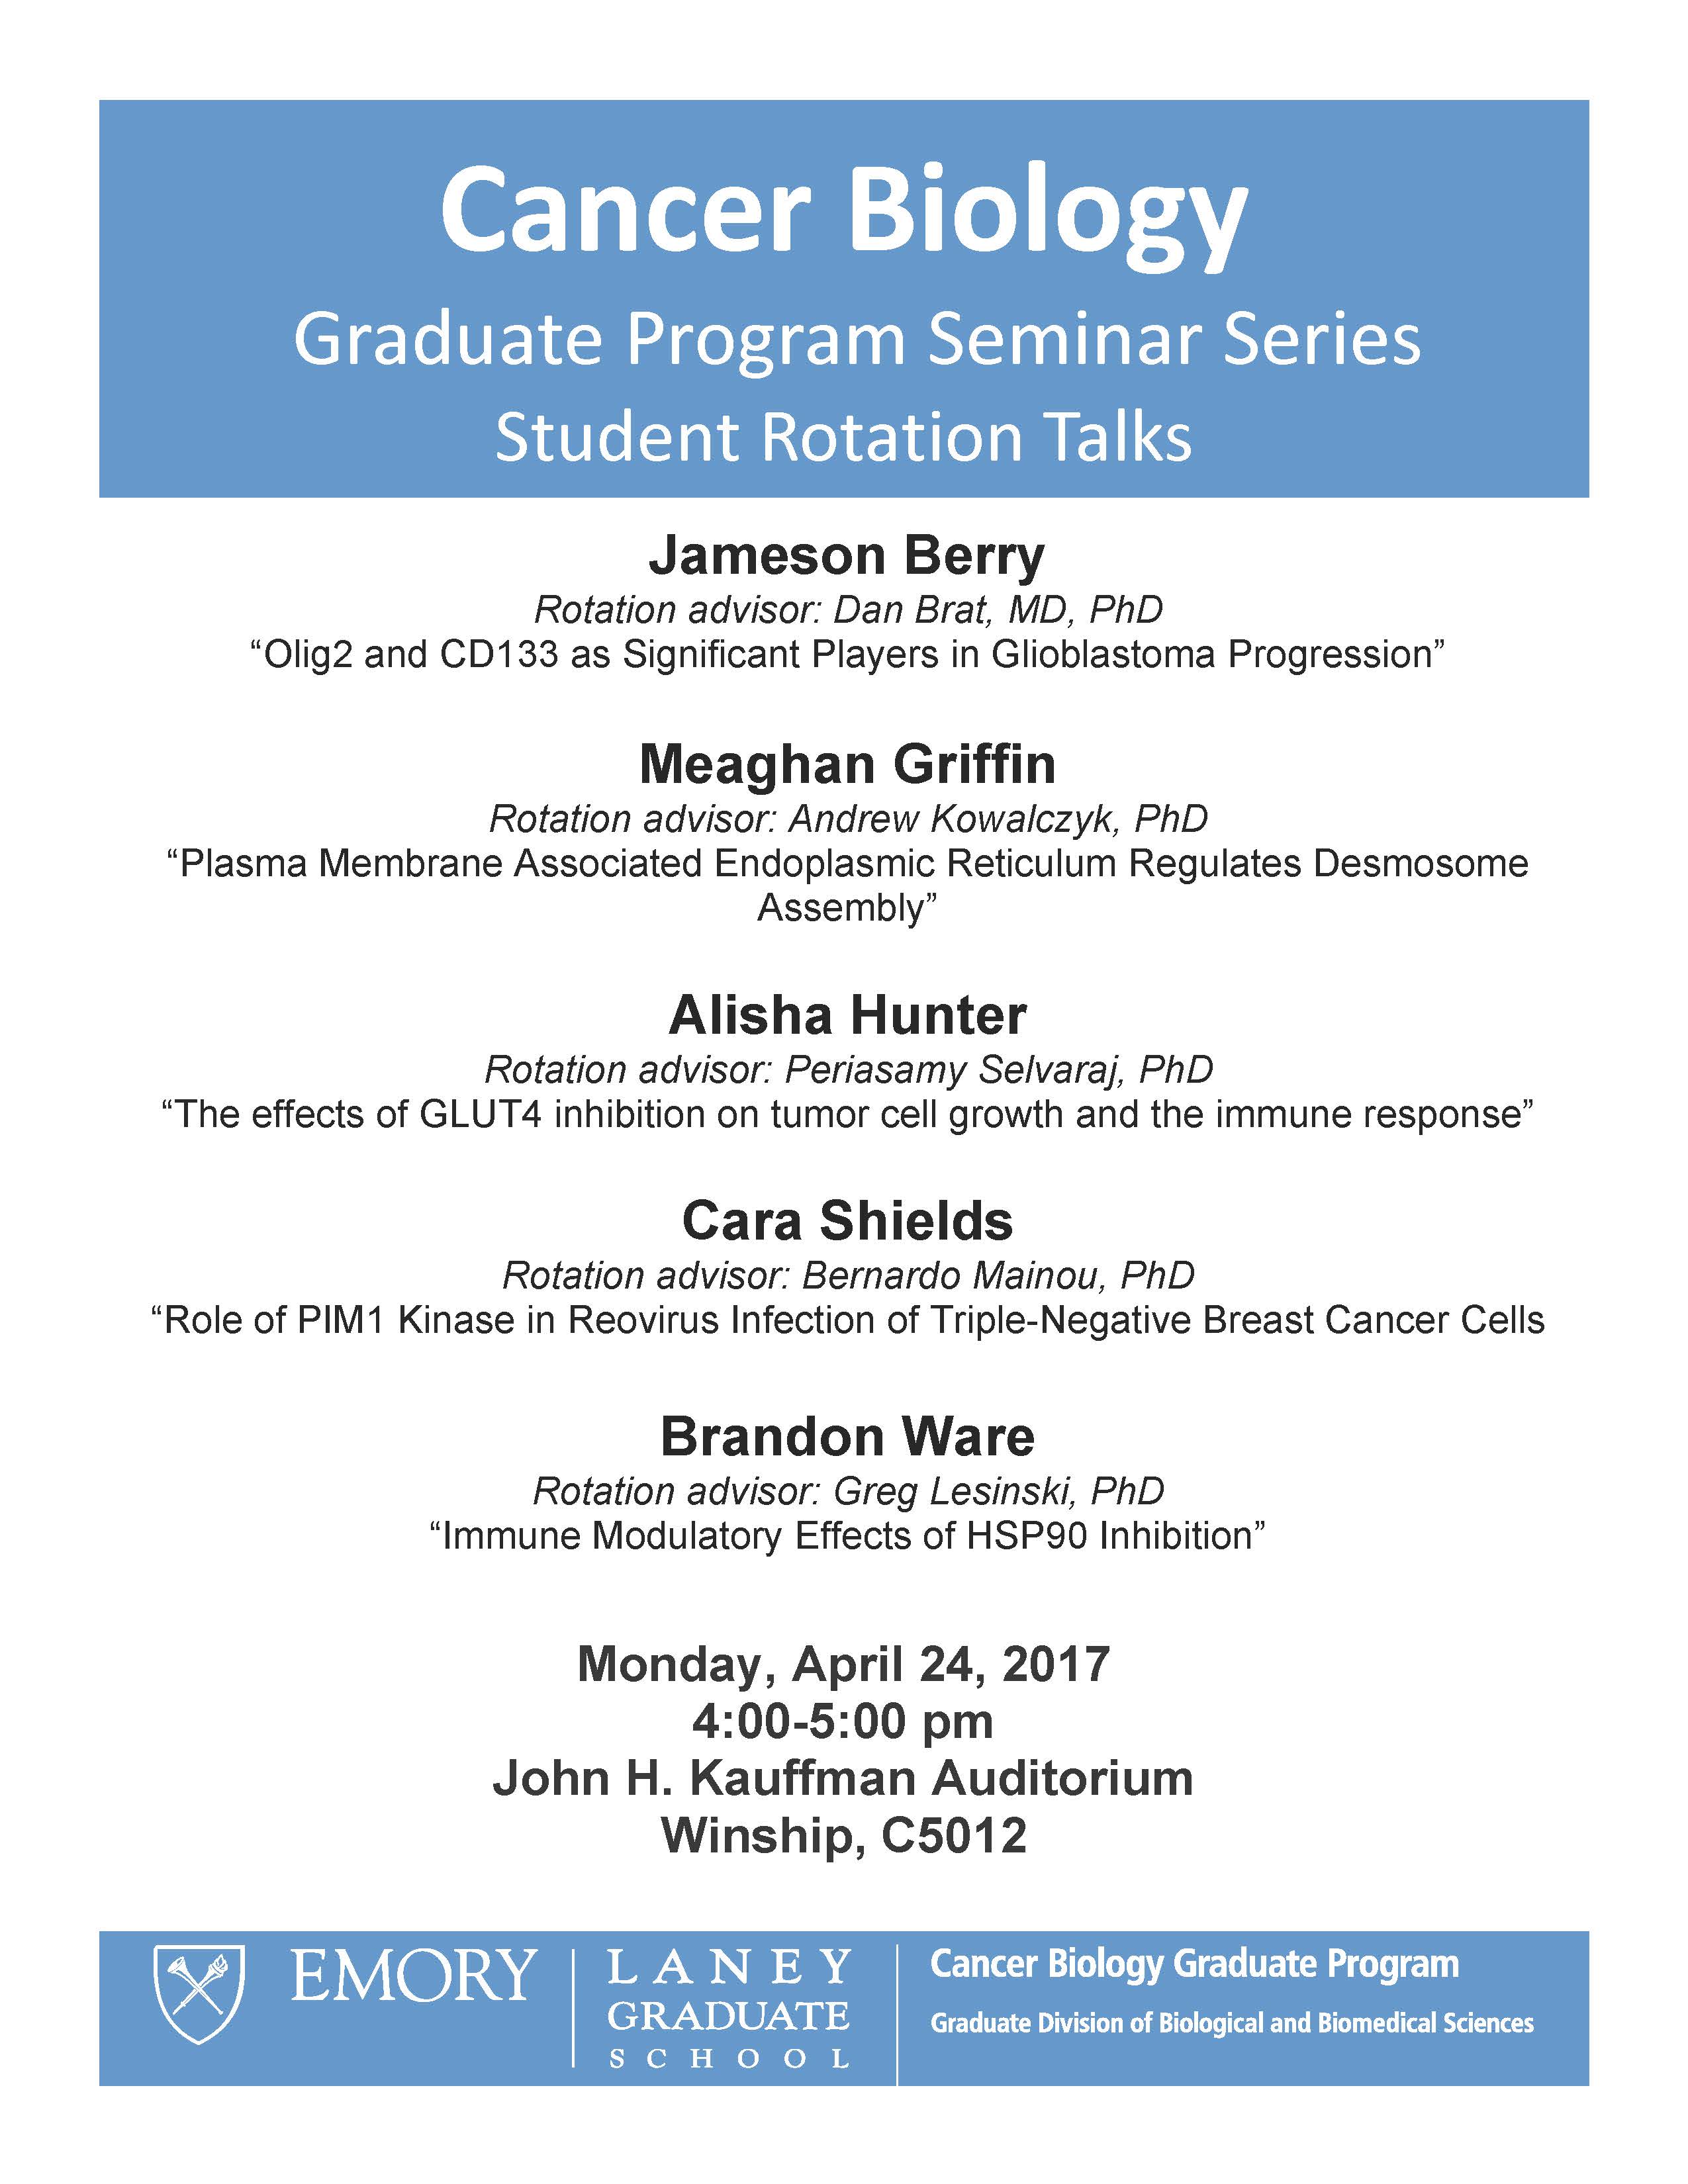 Cancer Biology Graduate Program Seminar Flyer